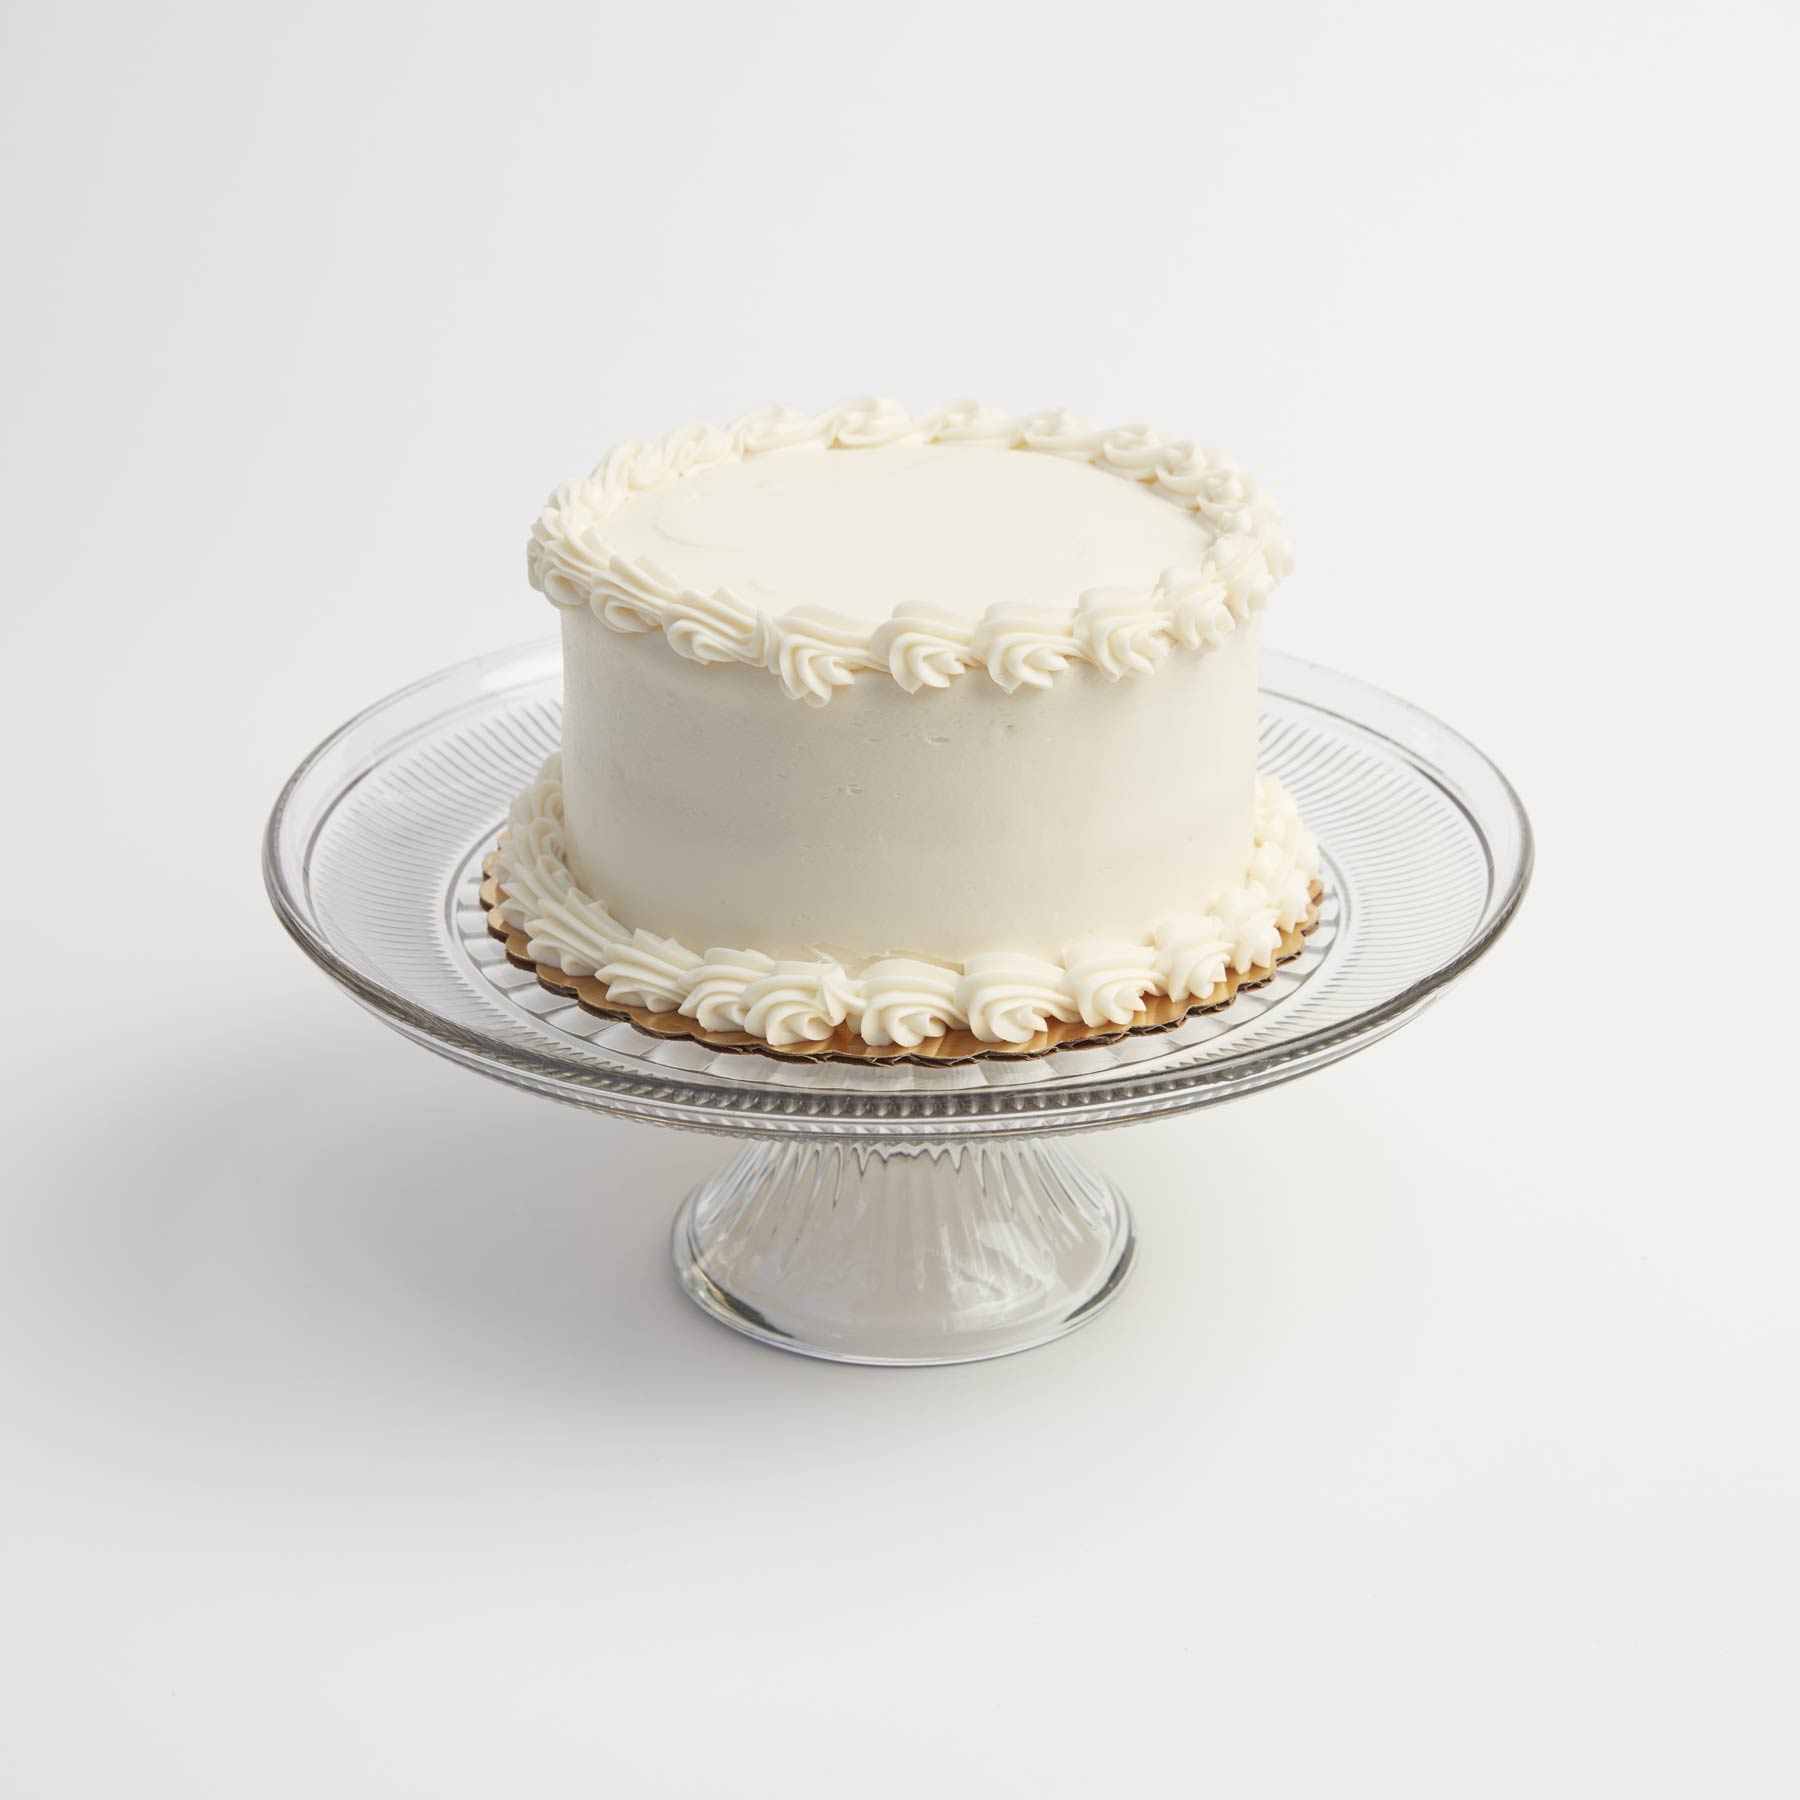 Plain Round White Cake On Round Stock Photo 2292335999 | Shutterstock